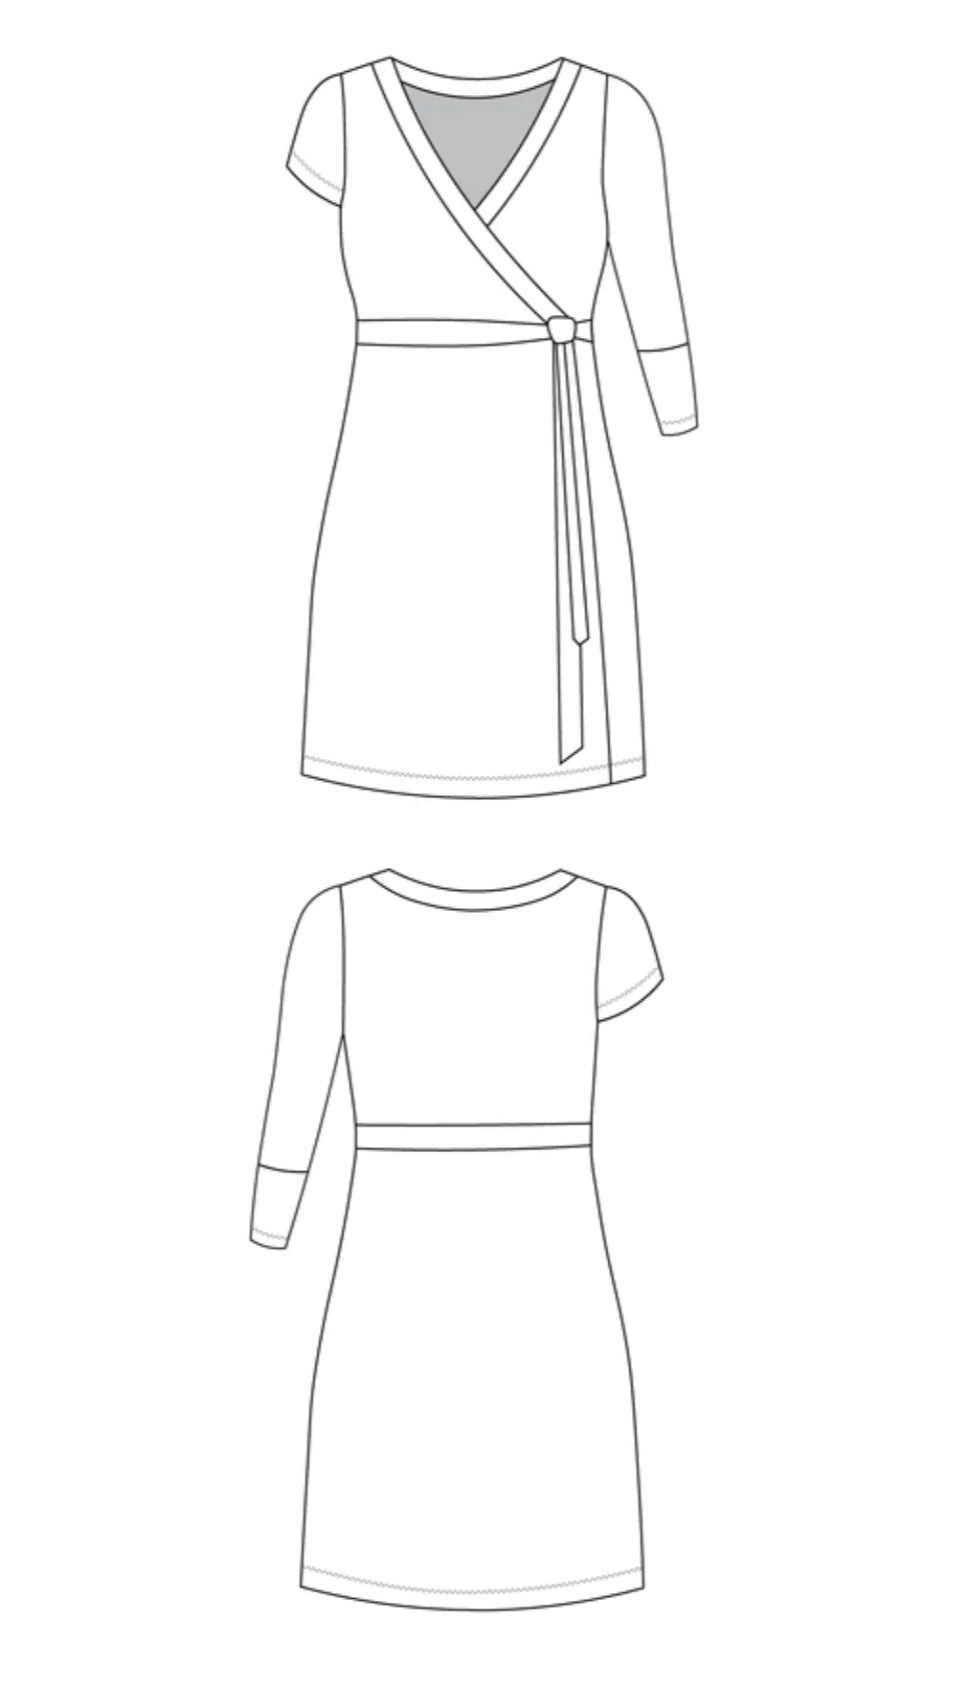 Sewing Kit - Appleton Dress in Petals Viscose Jersey